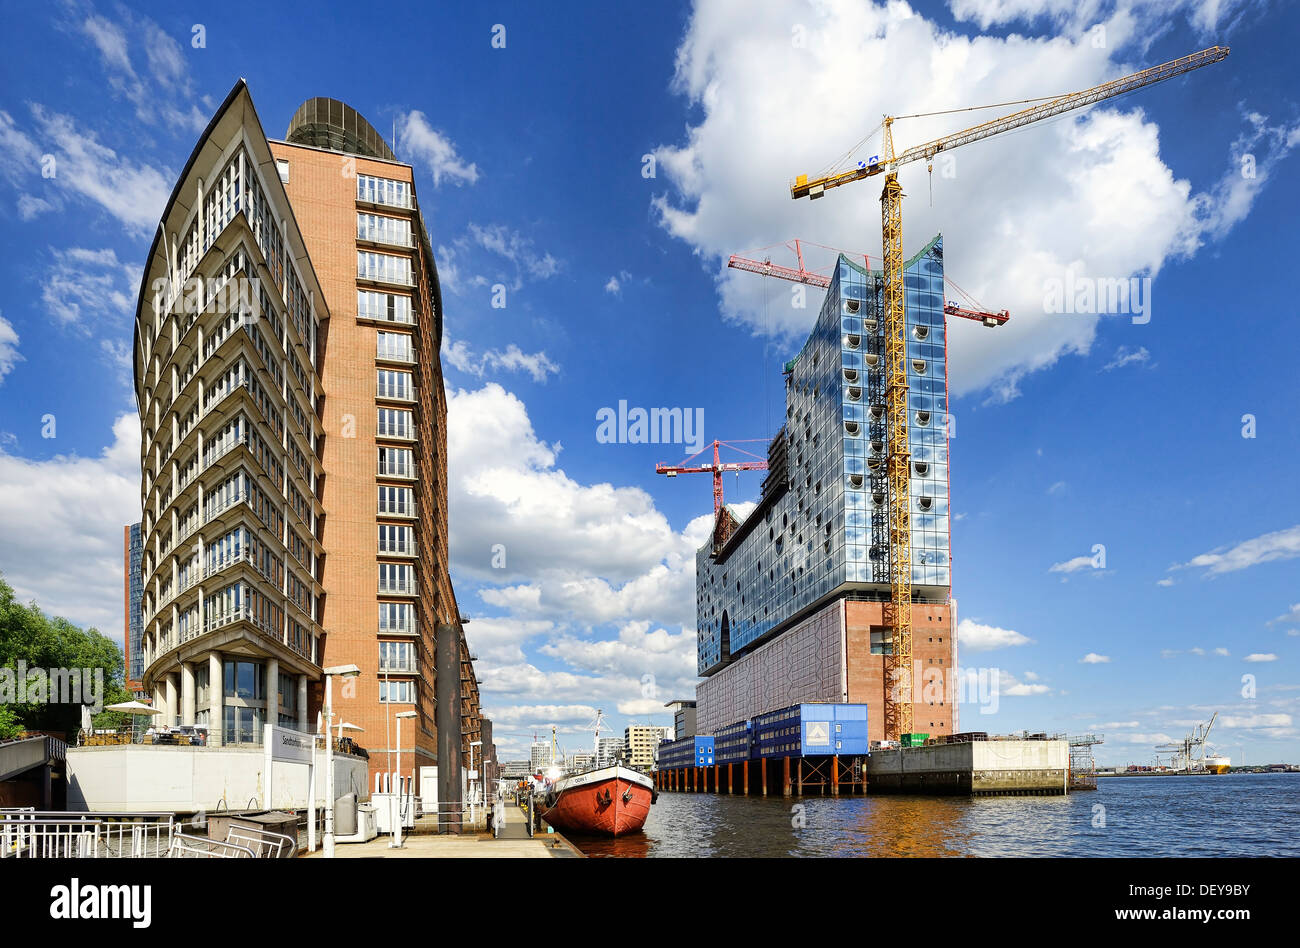 The Elbphilharmonie located under construction in Hamburg, Germany, Europe, Die im Bau befindliche Elbphilharmonie in Hamburg, D Stock Photo